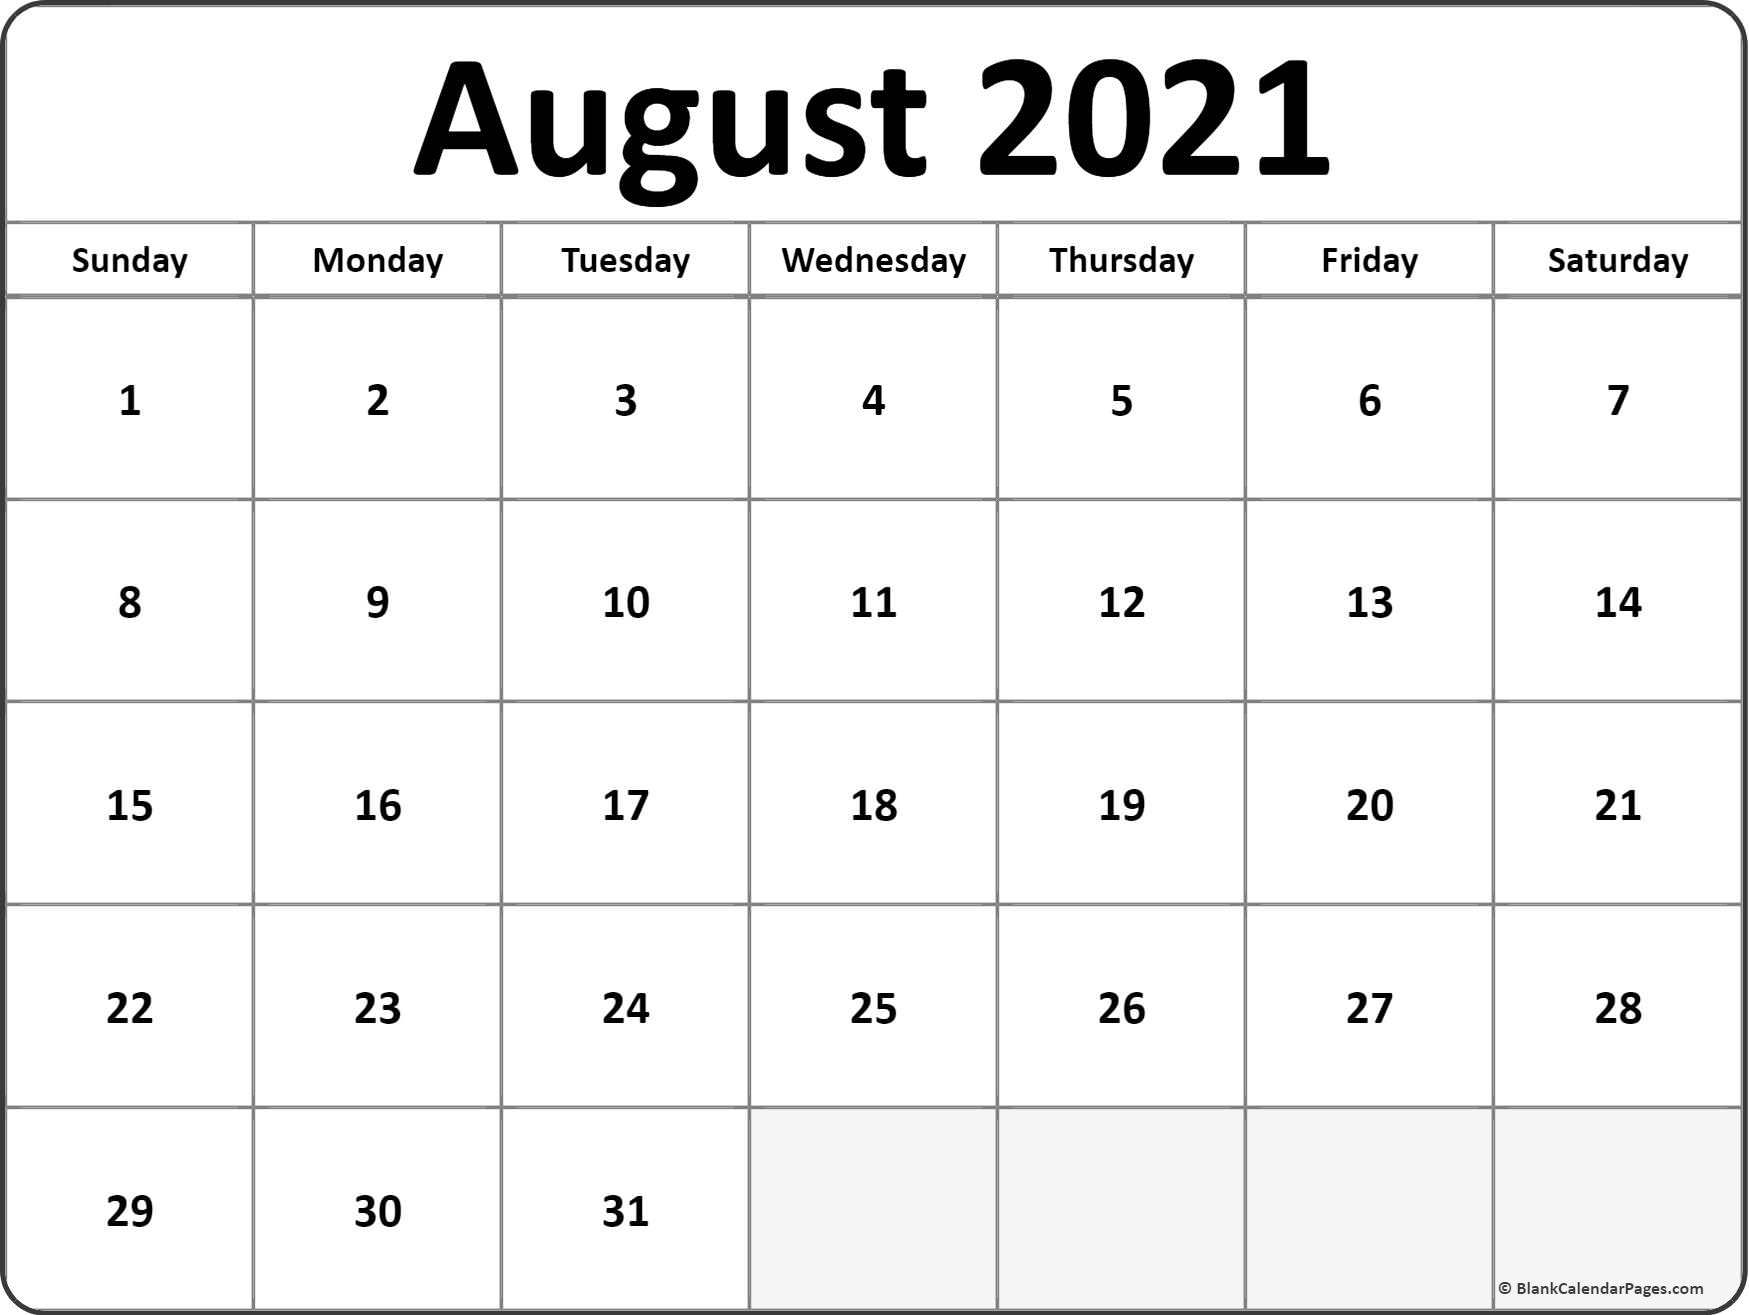 August 2021 Blank Calendar Templates.